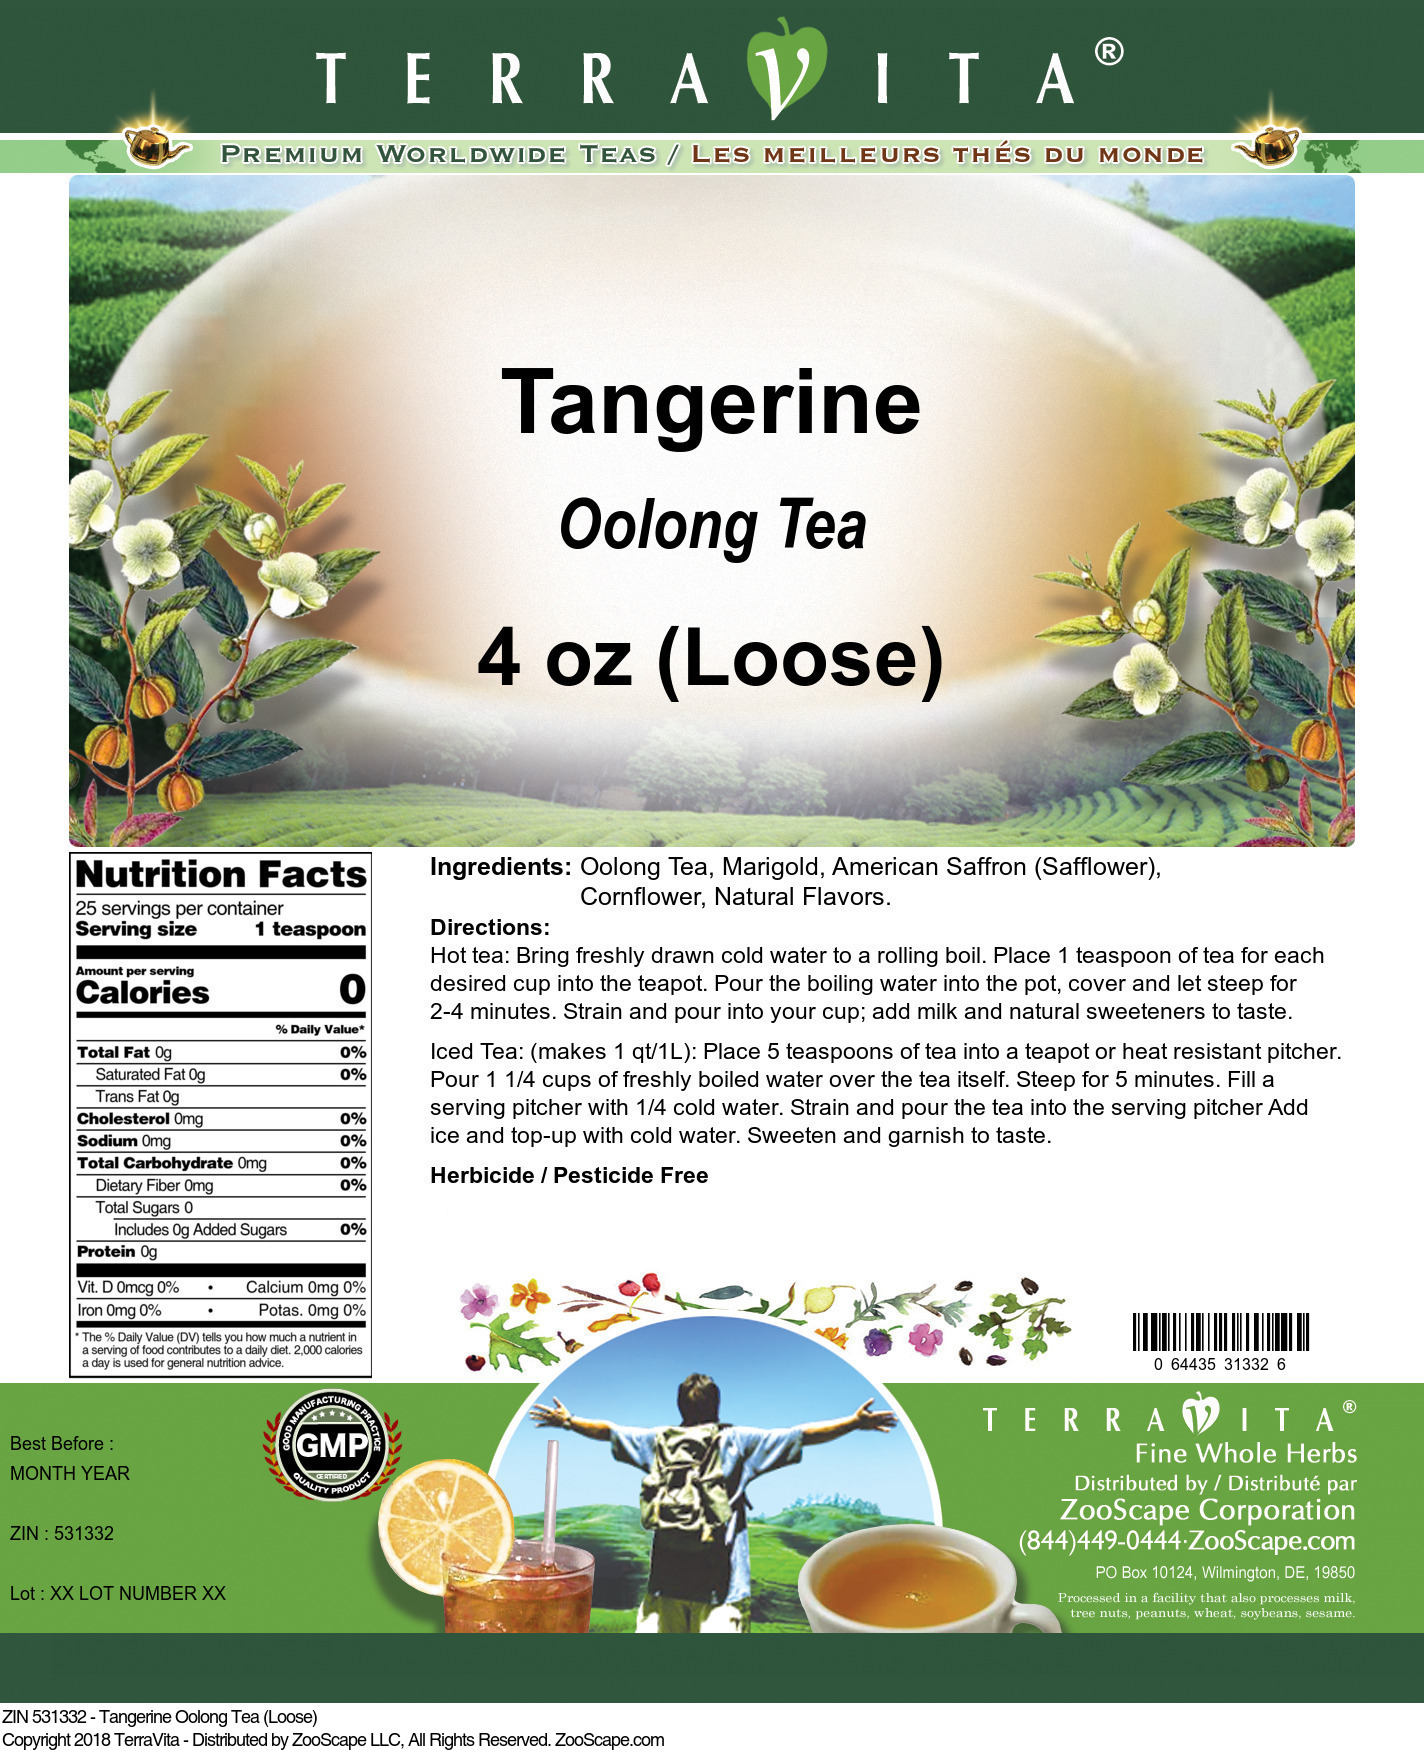 Tangerine Oolong Tea (Loose) - Label